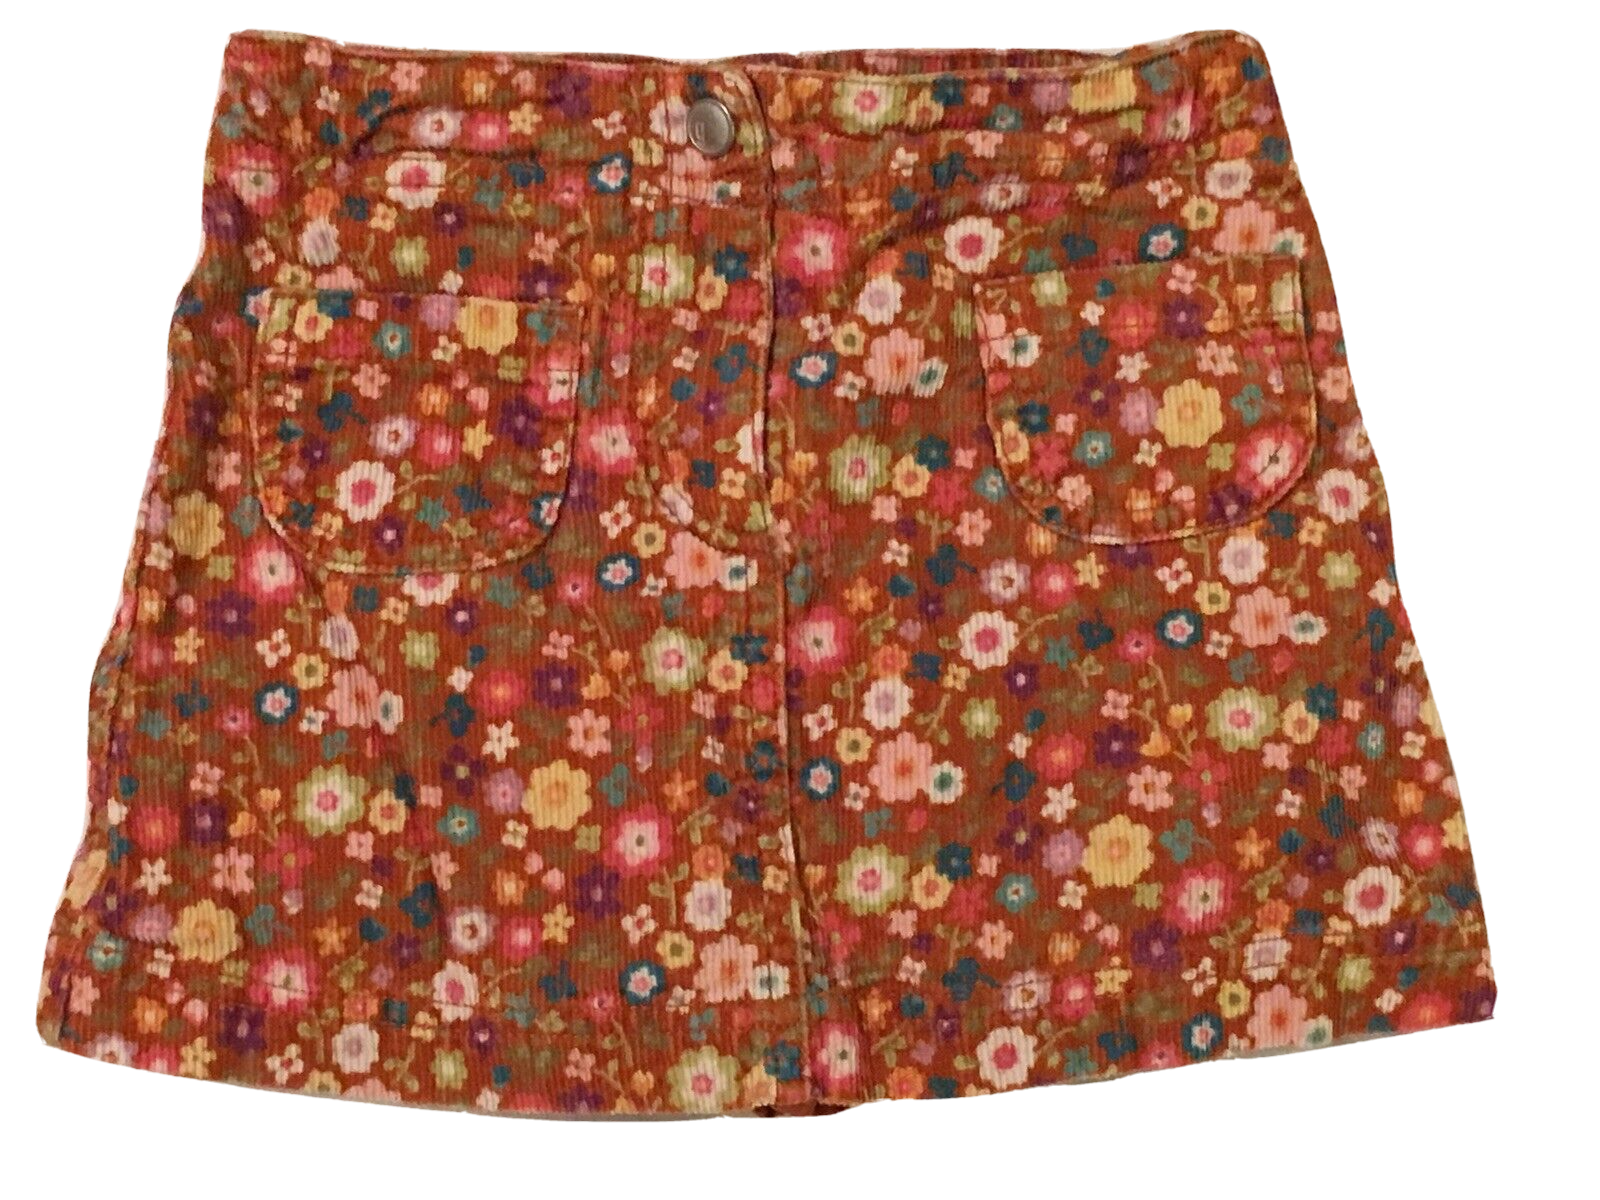 Gymboree Girls Size 4 Corduroy Floral Skirt Skort Mix N Match Fall Autumn School - $11.99